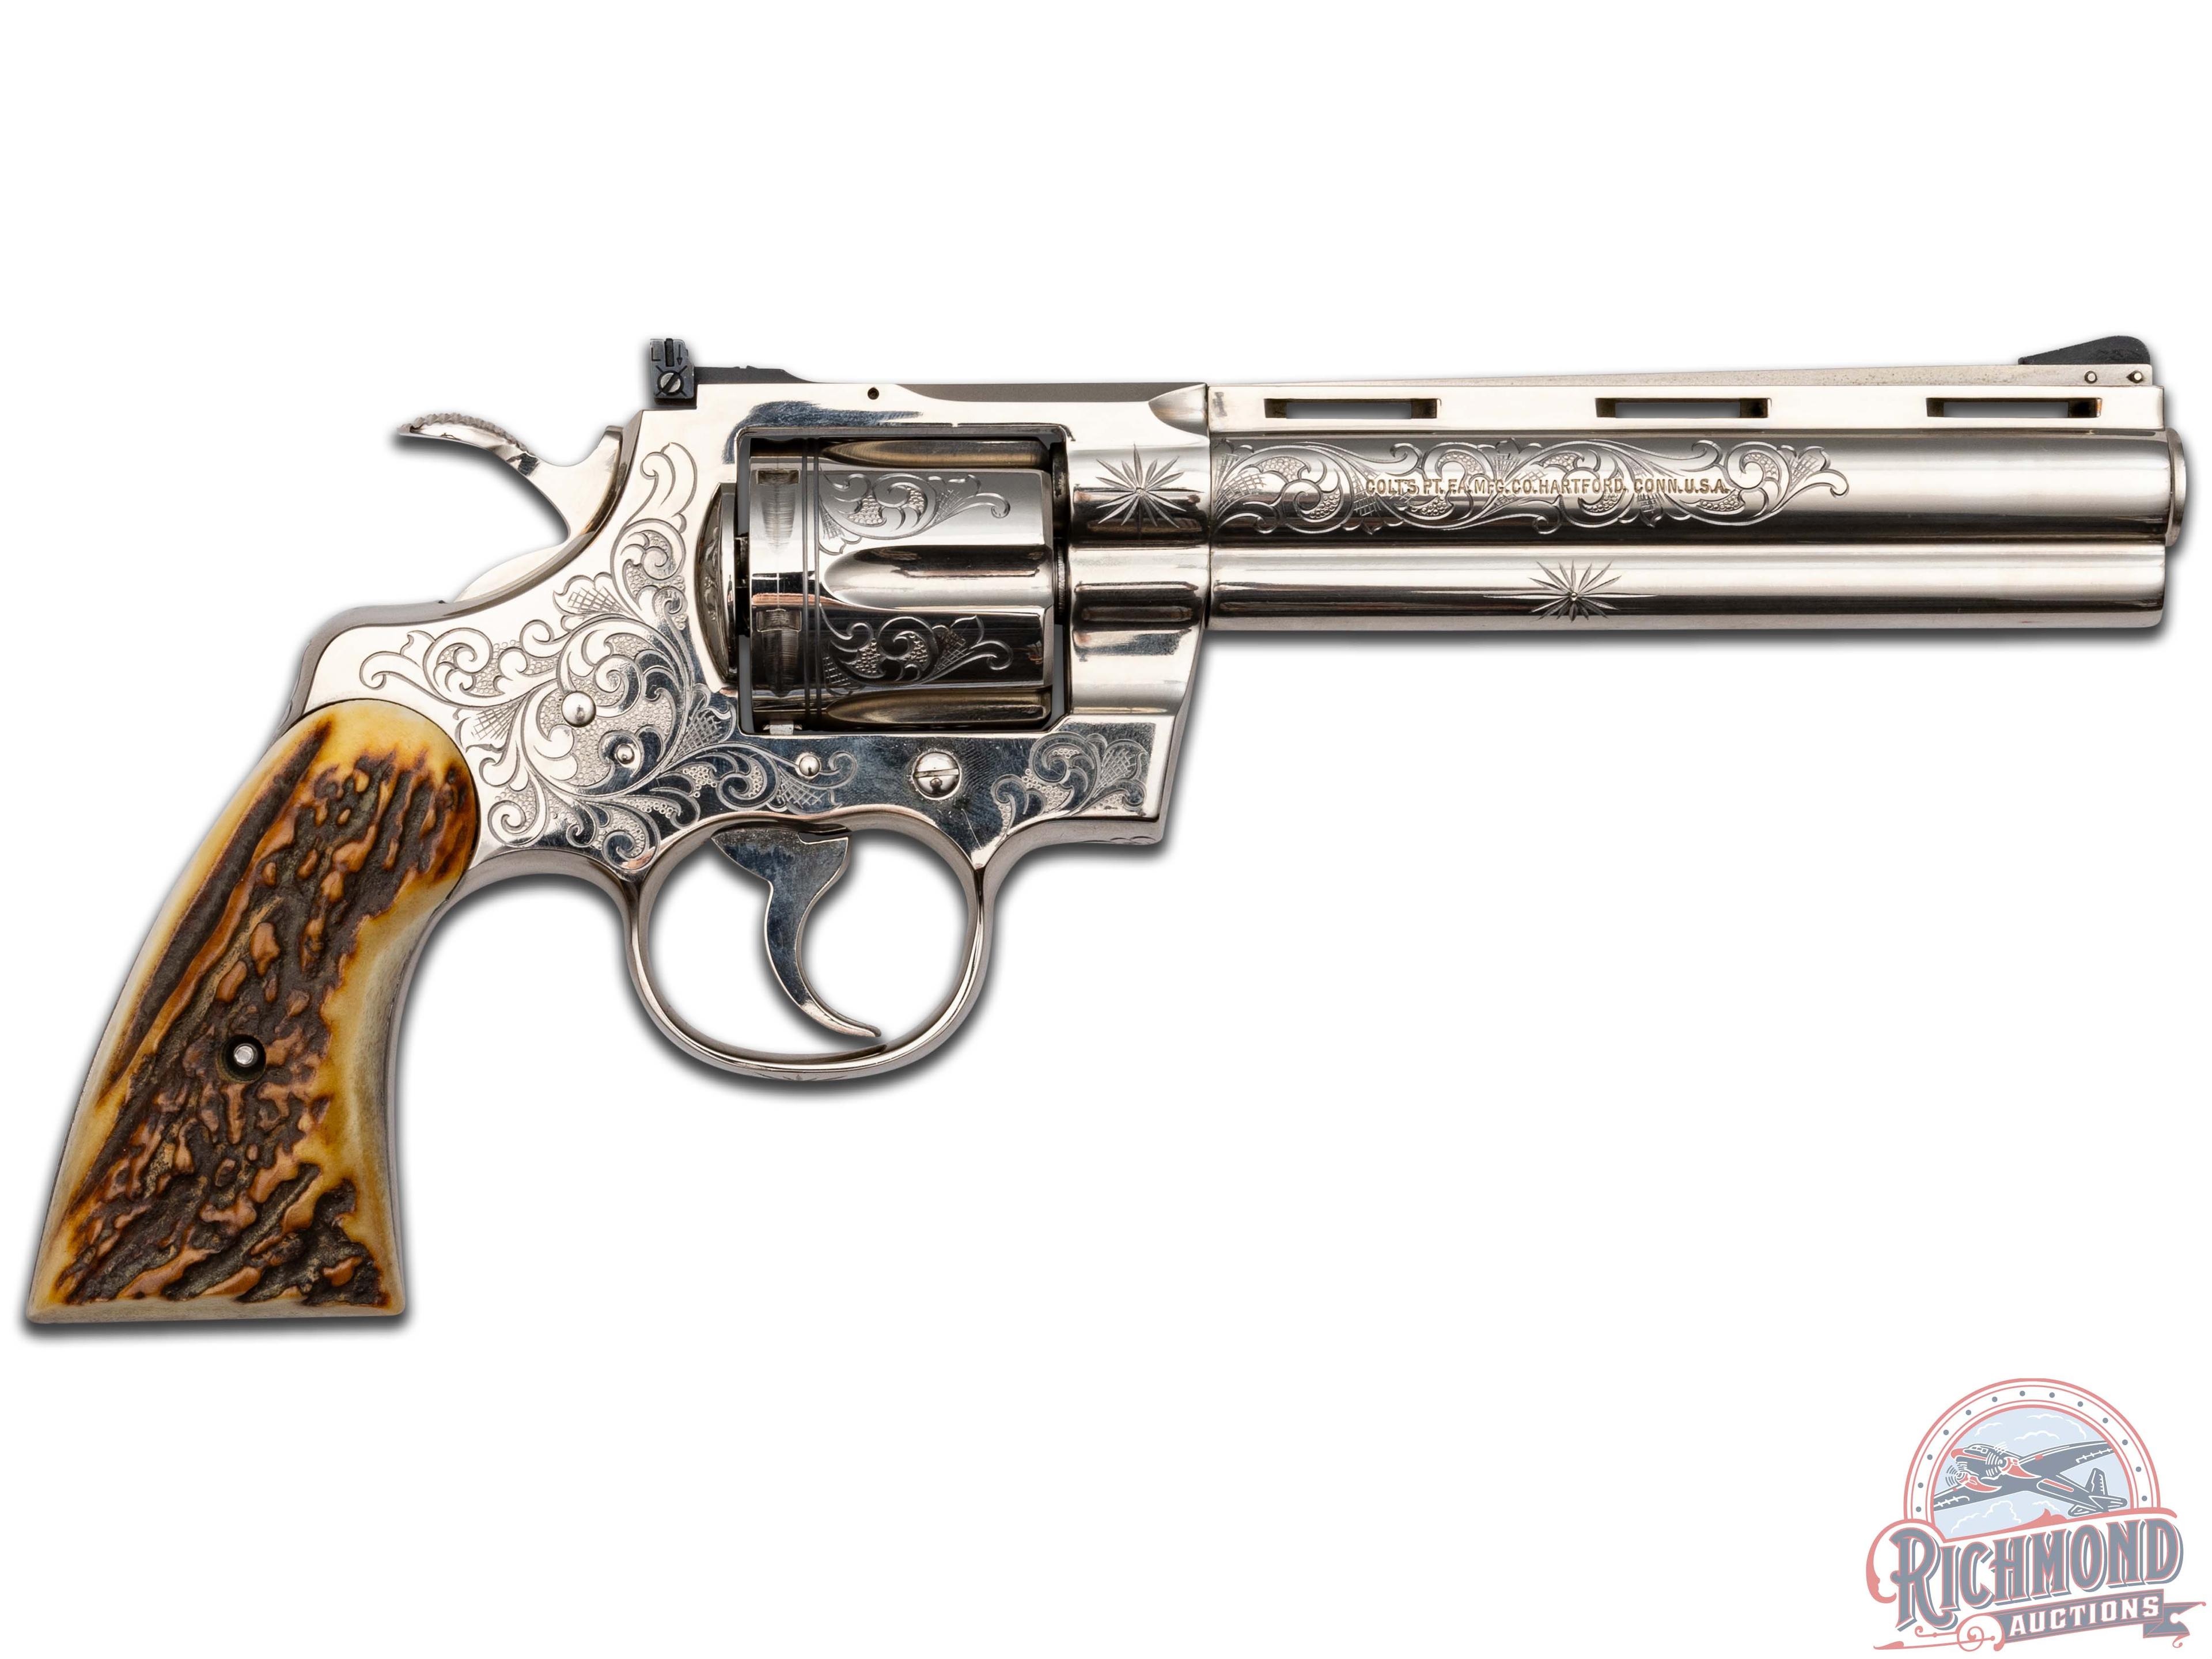 Stunning 1965 Colt Python 6" Nickel Engraved .357 Mag Revolver w/ Stag Grips & Presentation Case